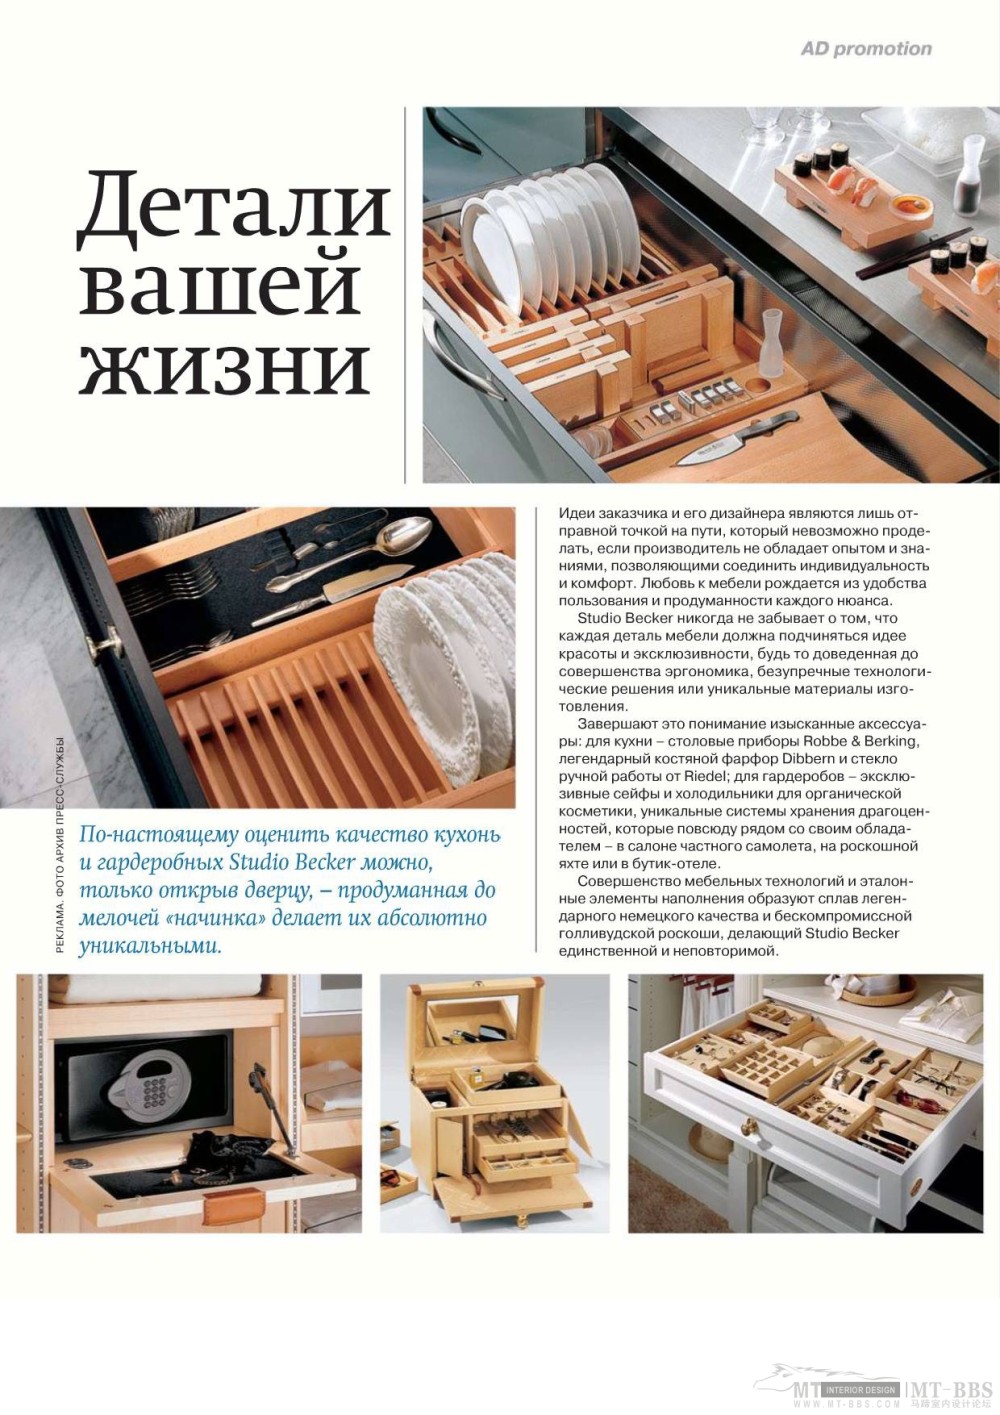 《AD Russia》2010-09(国外陈设设计杂志)_AD Russia 2010-09MT-BBS-263.jpg